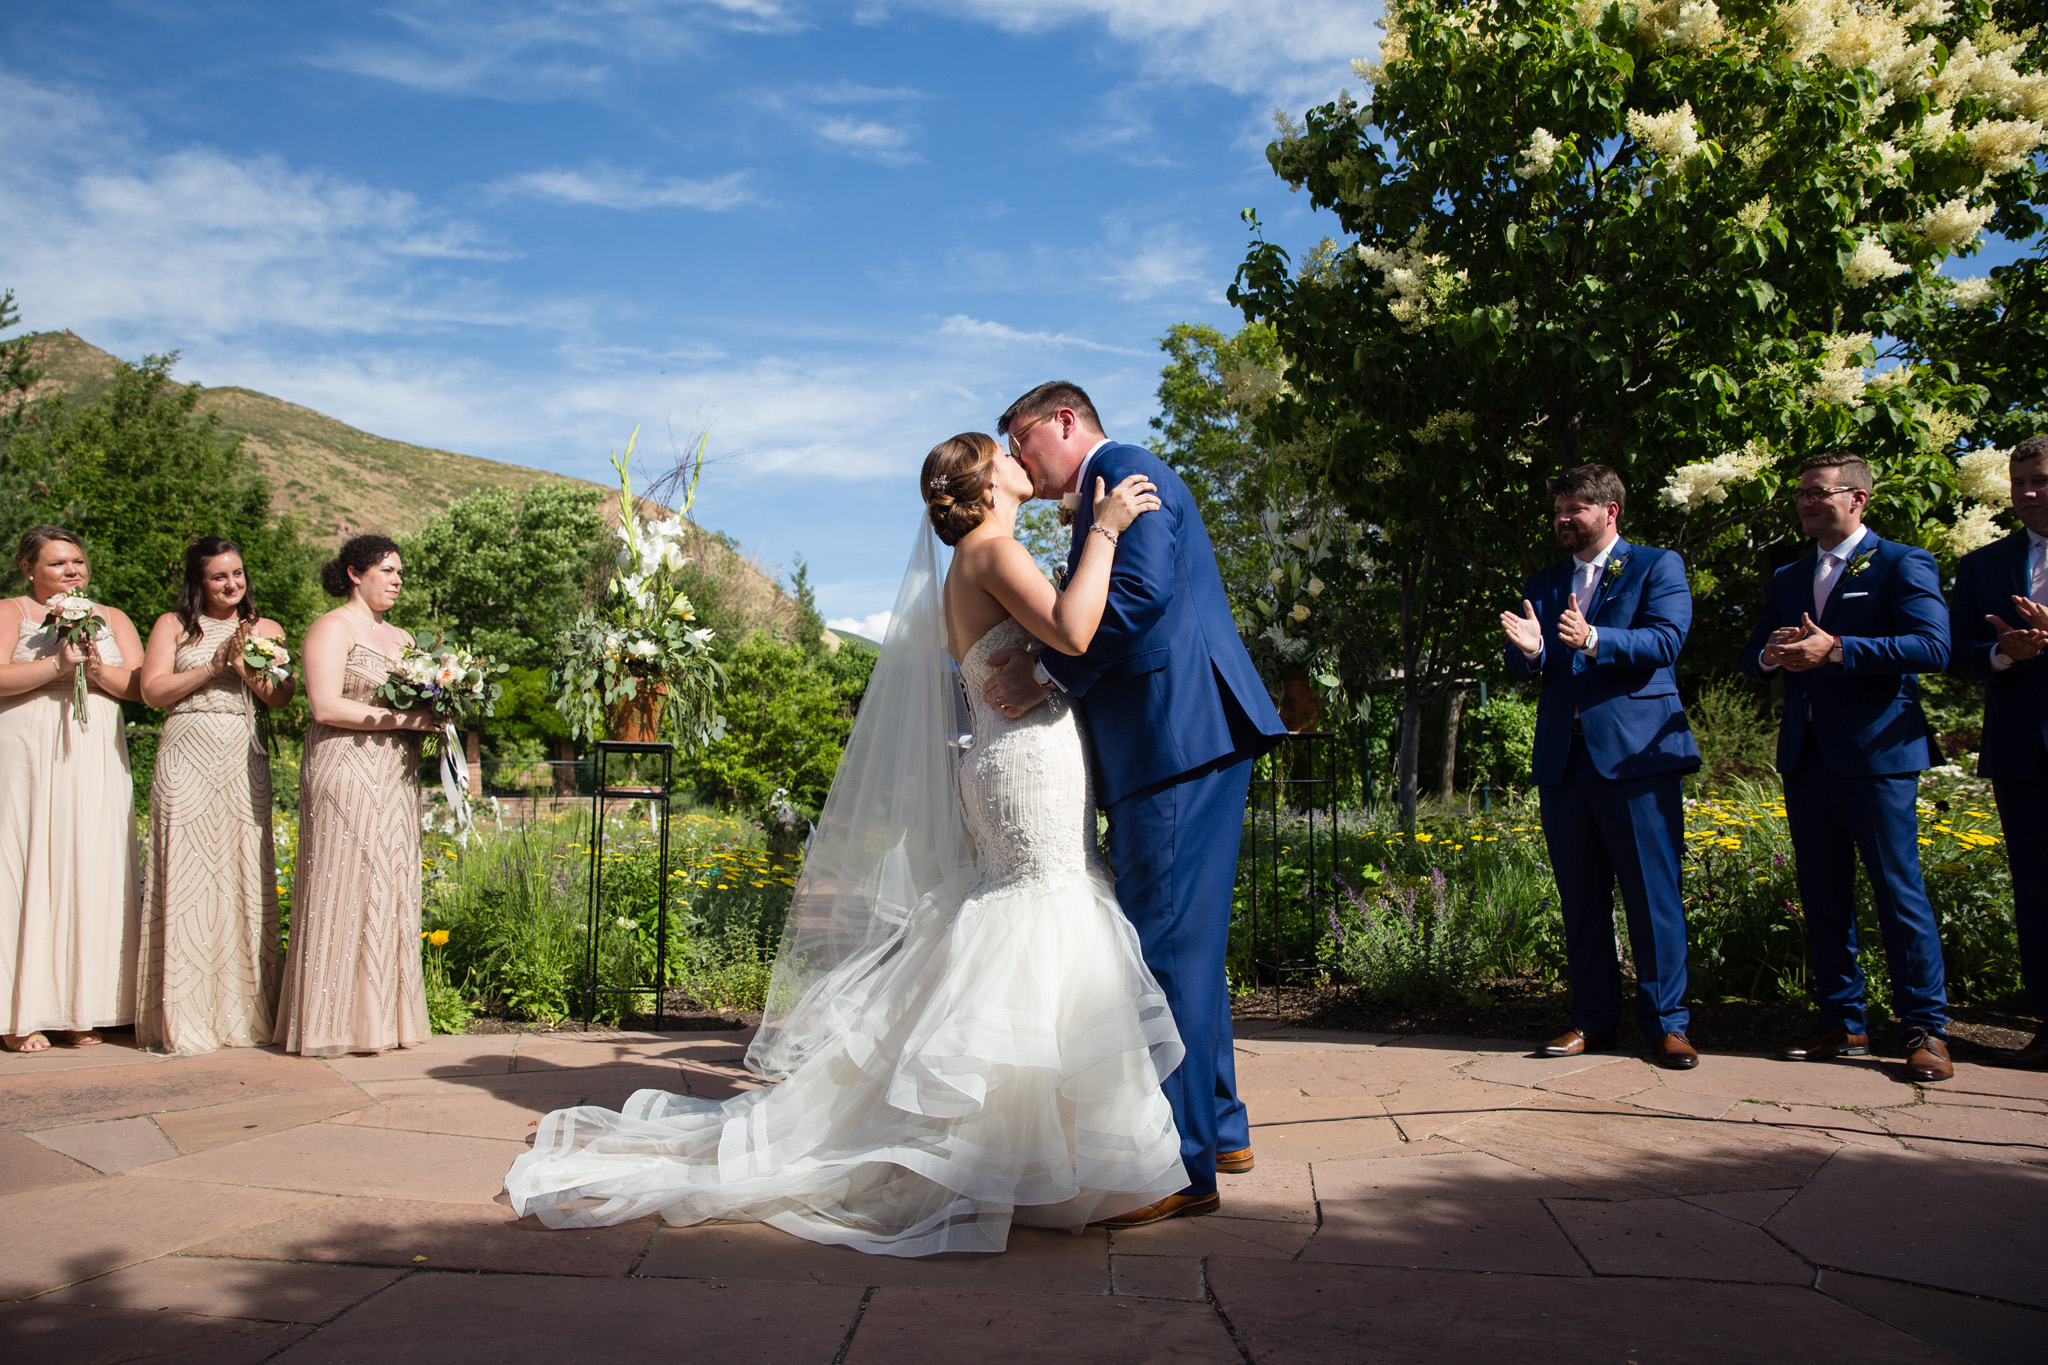 Red Butte Garden Wedding | Salt Lake City Wedding | Gold and Rose Gold Wedding | Michelle Leo Events | Utah Event Planner and Designer | Melissa Kelsey Photography